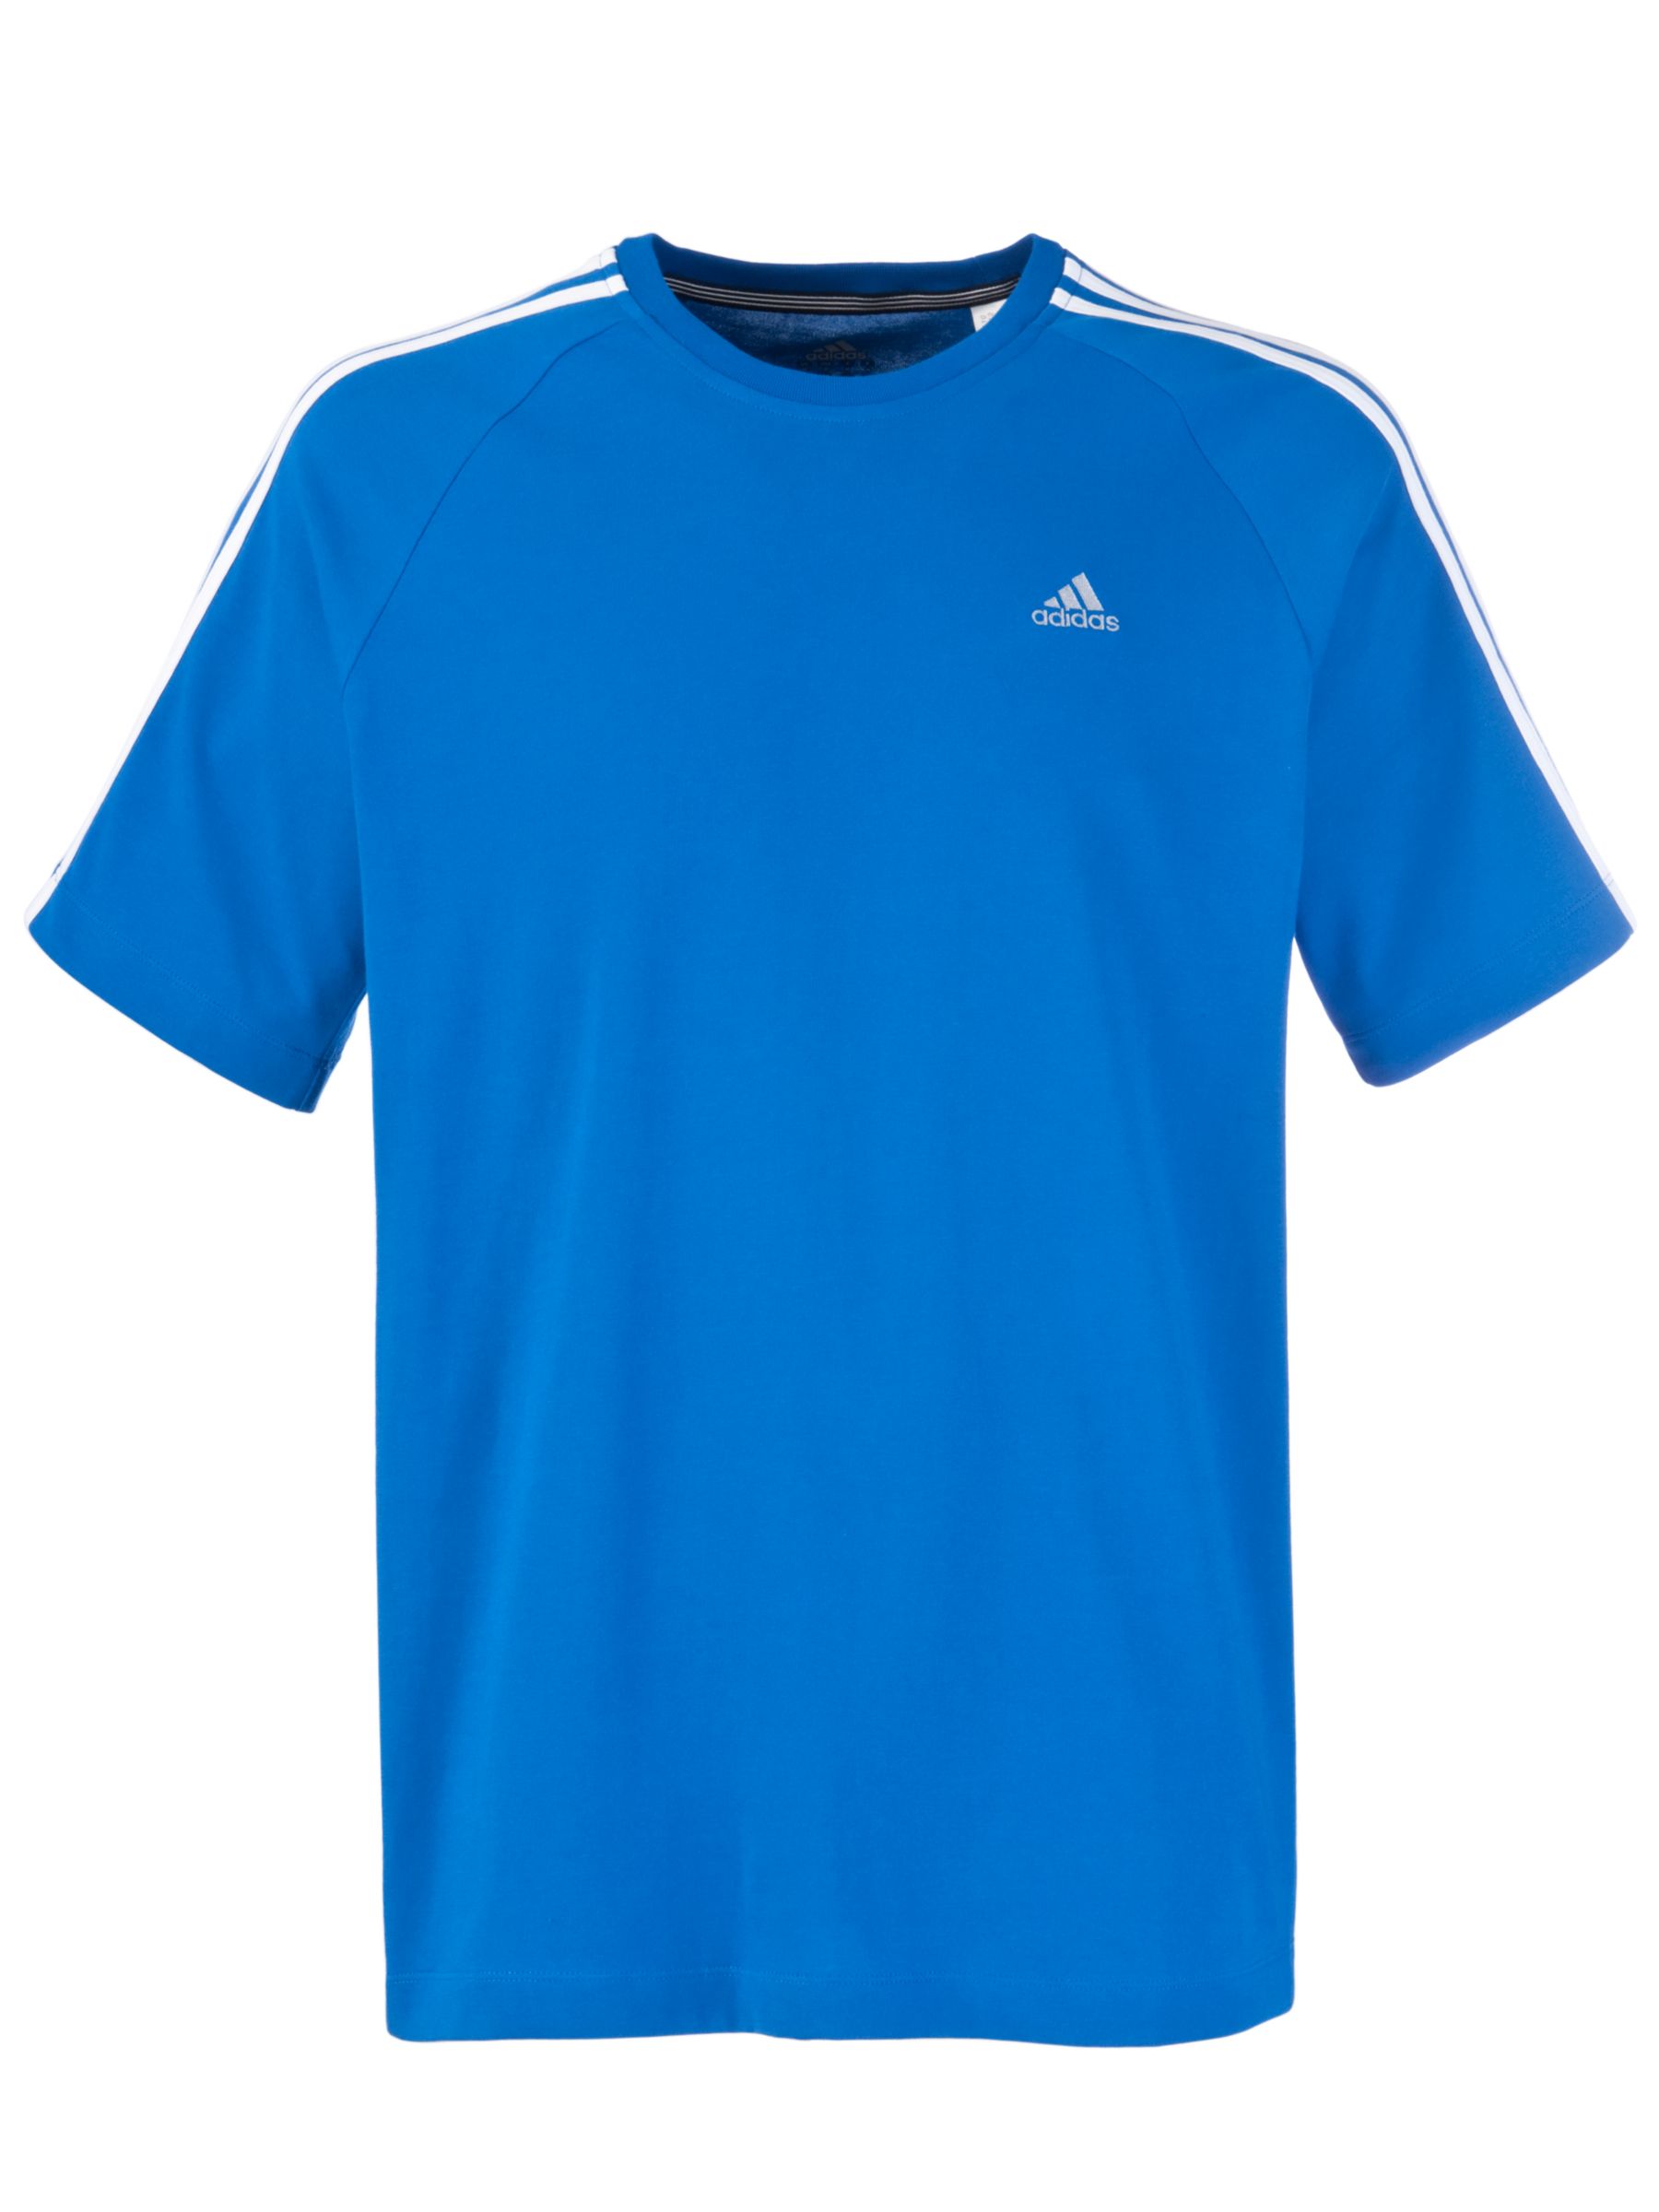 Essential 3 Stripe T-Shirt, Blue